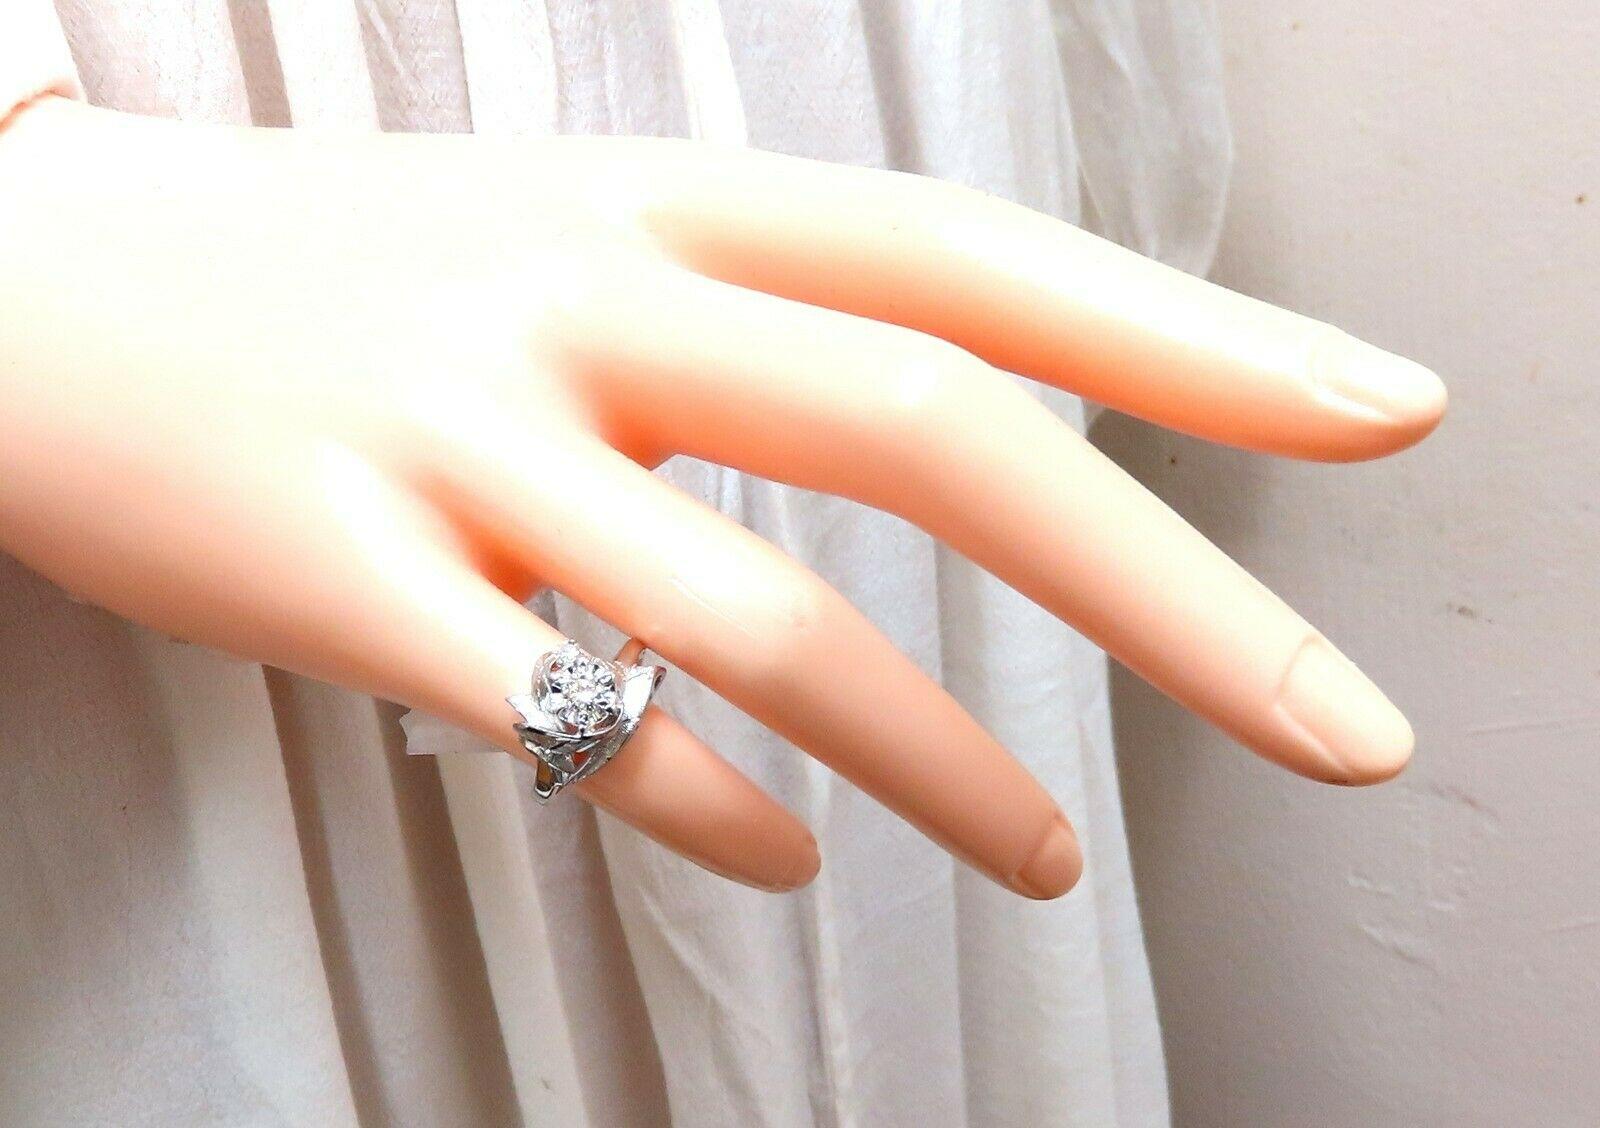 20 carat round diamond ring